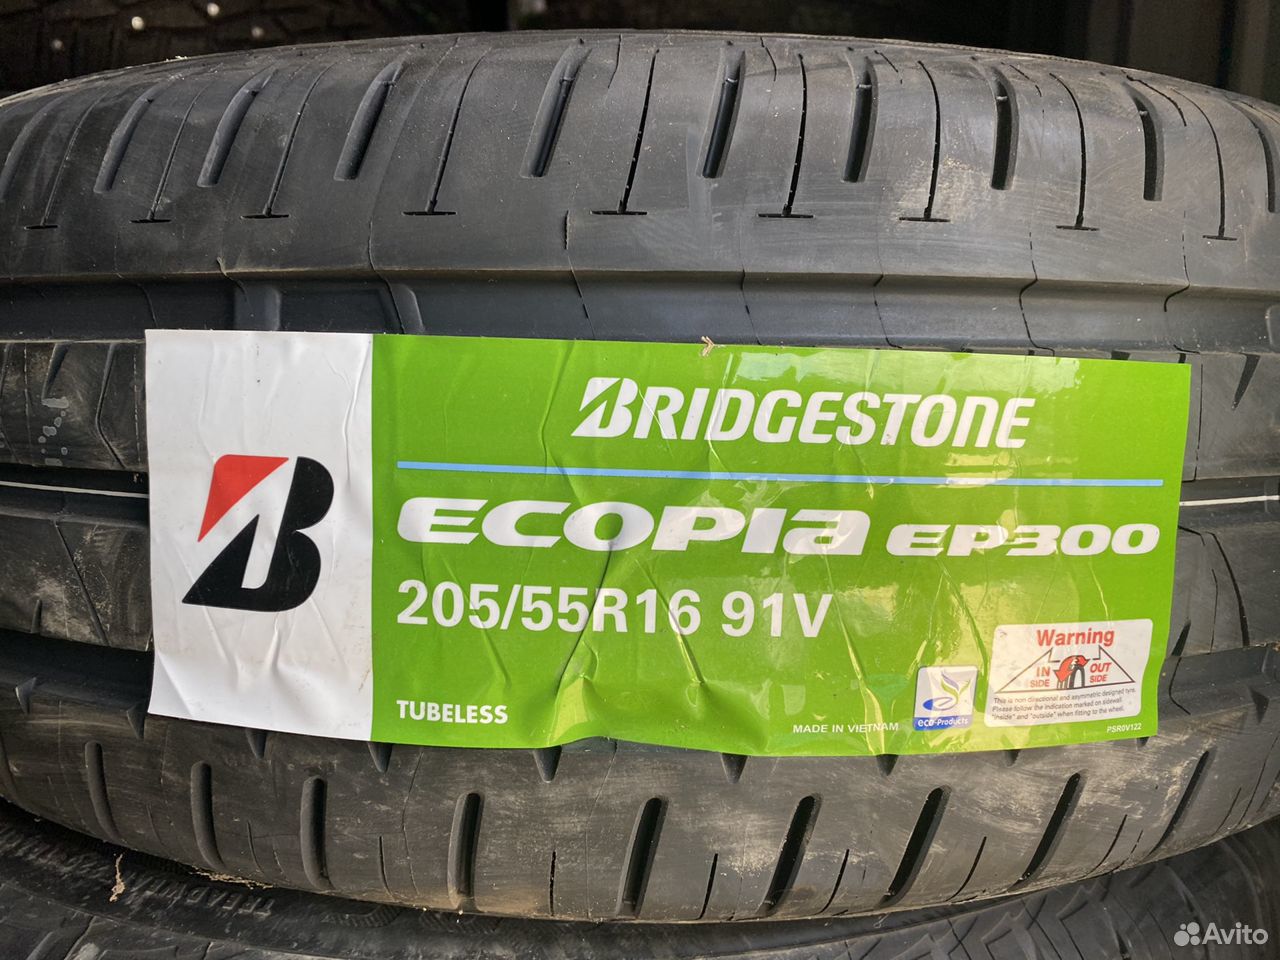 Bridgestone Ecopia ep300 205/55 r16 91v. Bridgestone 215/60r16 95v Ecopia ep300. Bridgestone Ecopia ep300 91v 2021. Bridgestone Ecopia ep300 215/60/16. 205 55 r16 91v летняя купить